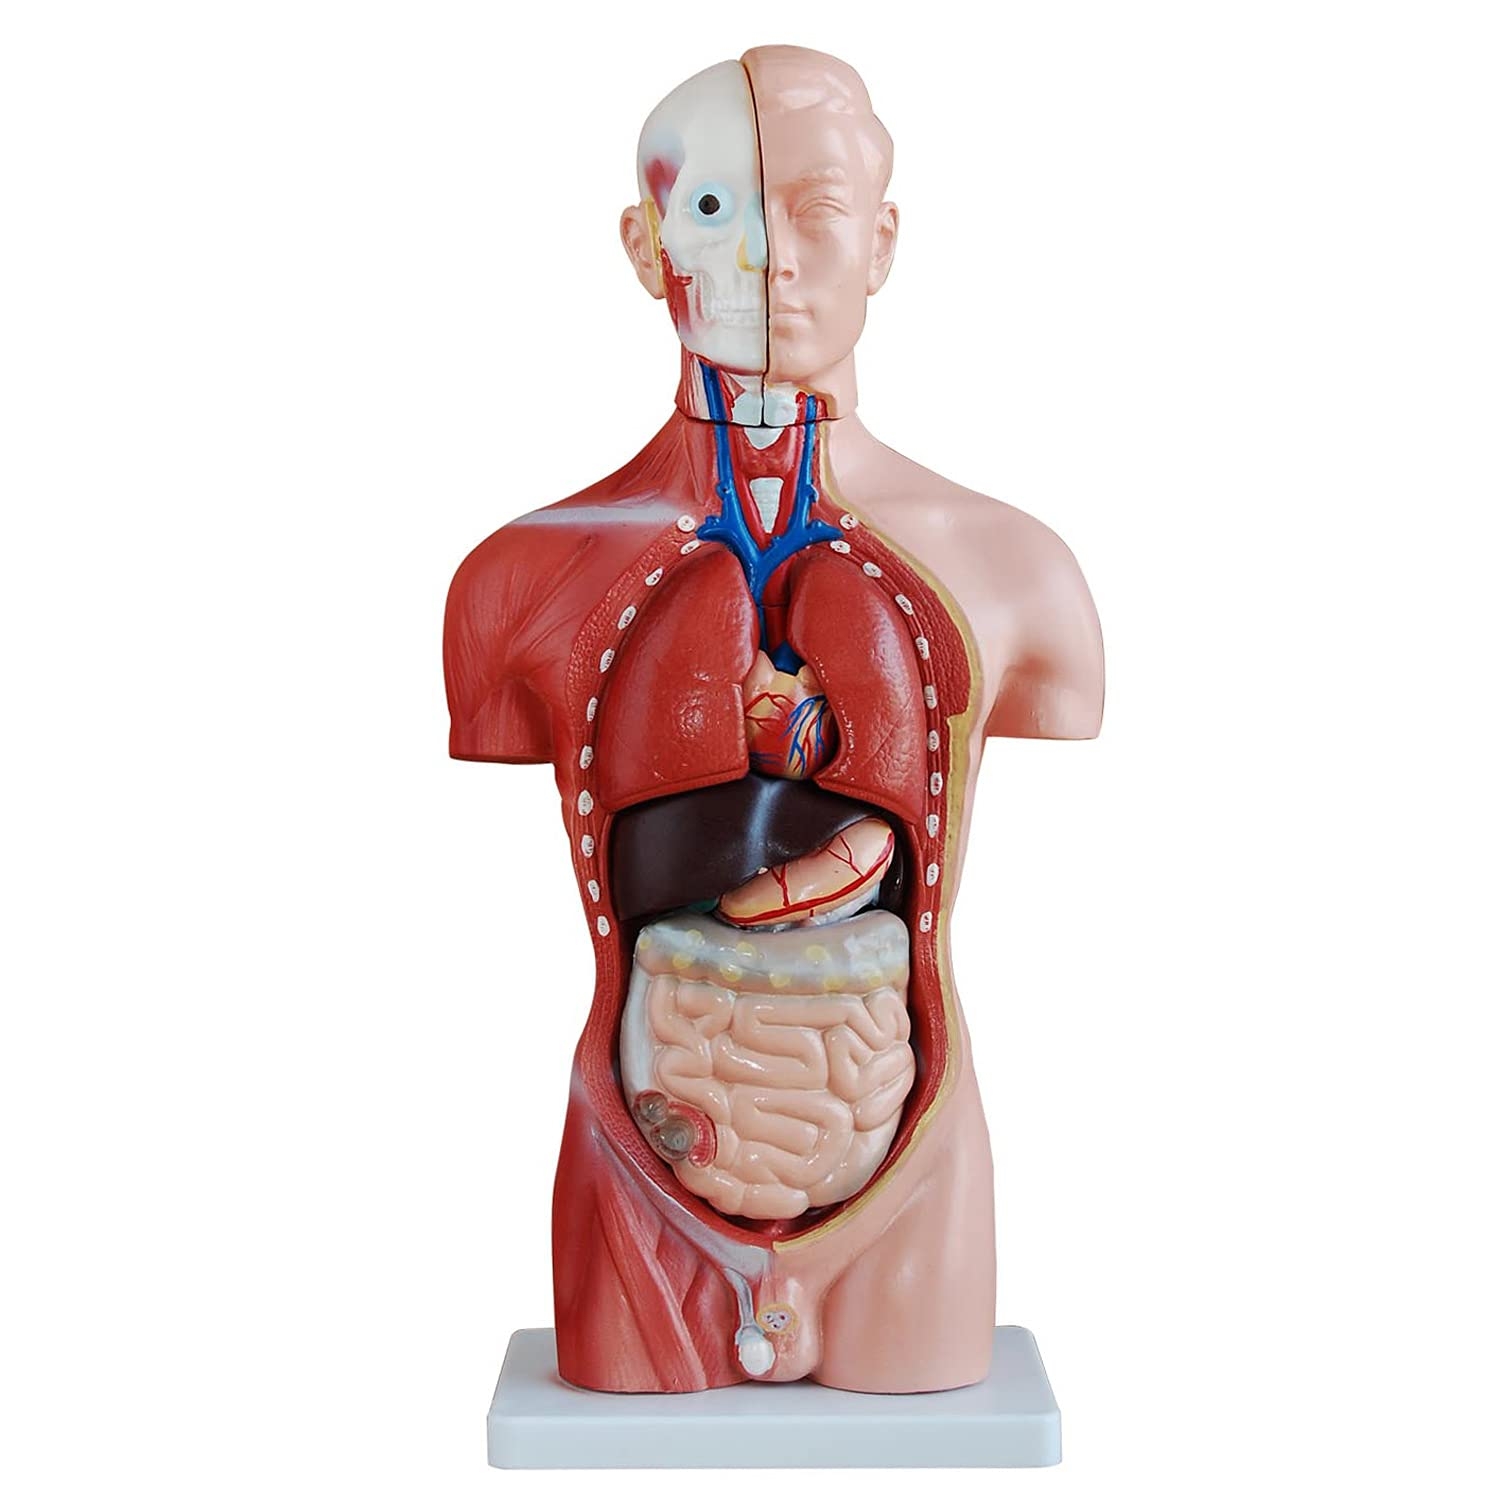 MedMod Anatomy Model Torso Of Human Anatomy Model Human Body Anatomical Human Model Teaching Model Large Amazon de Business Industry Science